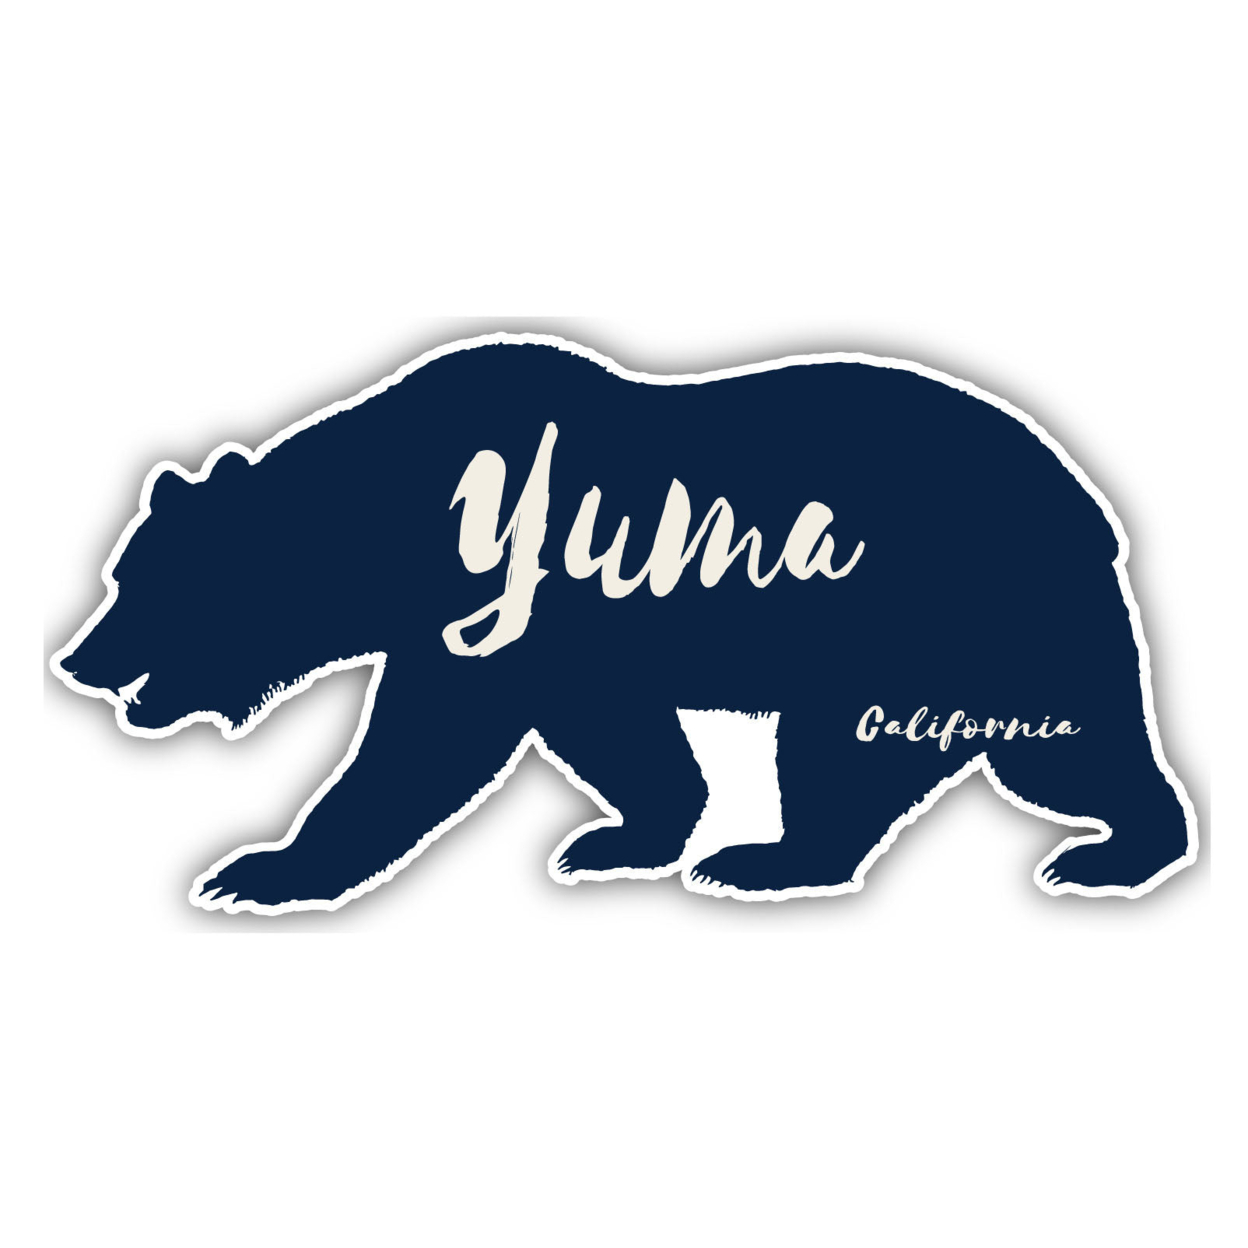 Yuma California Souvenir Decorative Stickers (Choose Theme And Size) - Single Unit, 2-Inch, Bear